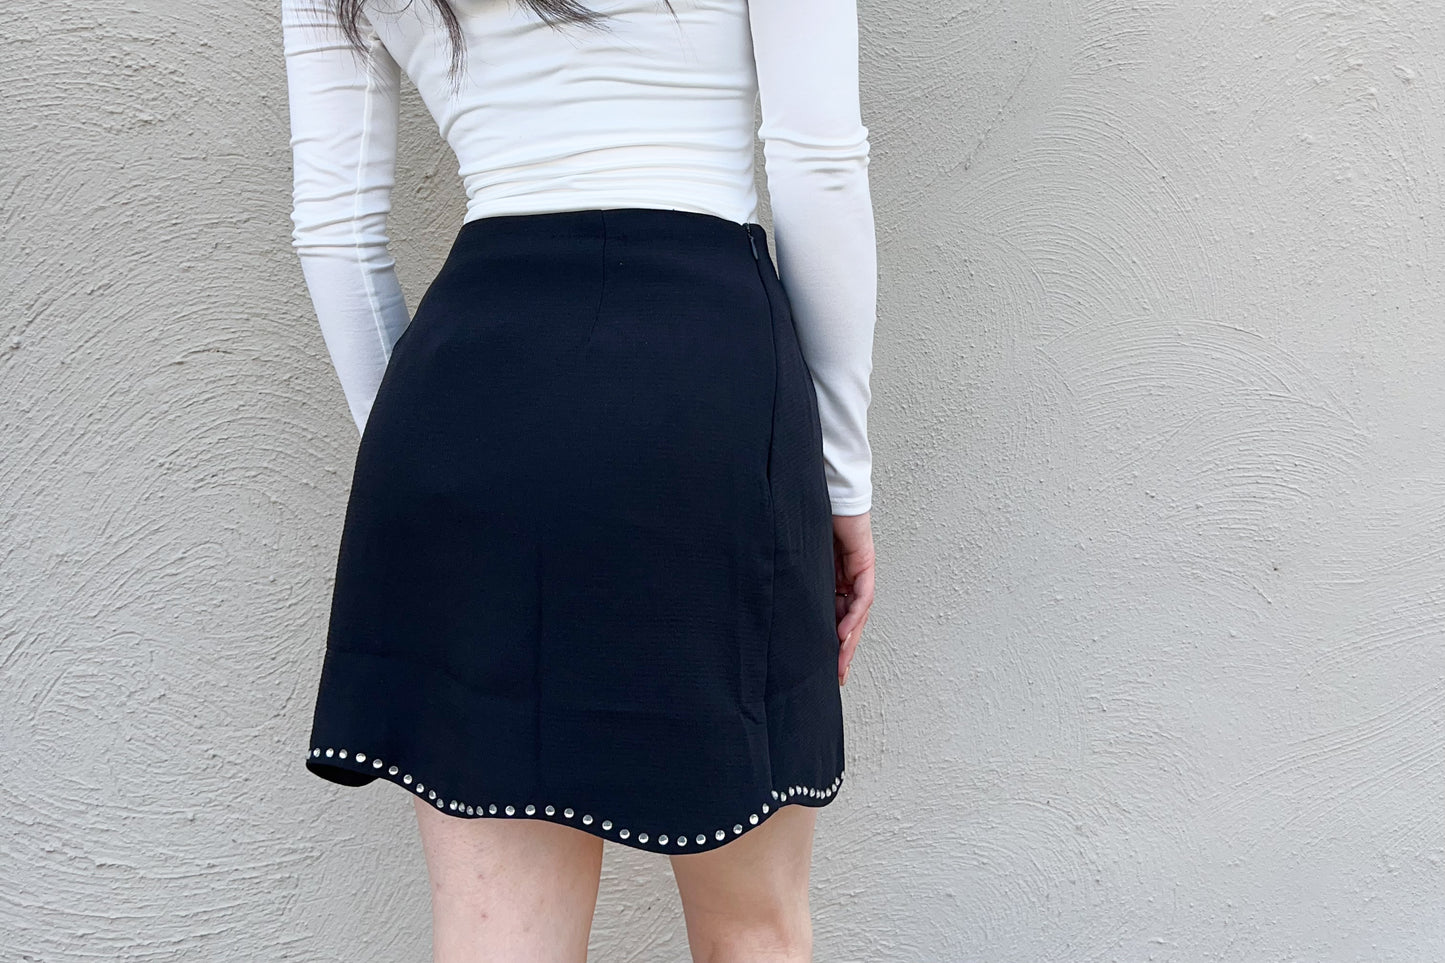 Star Studded Skirt